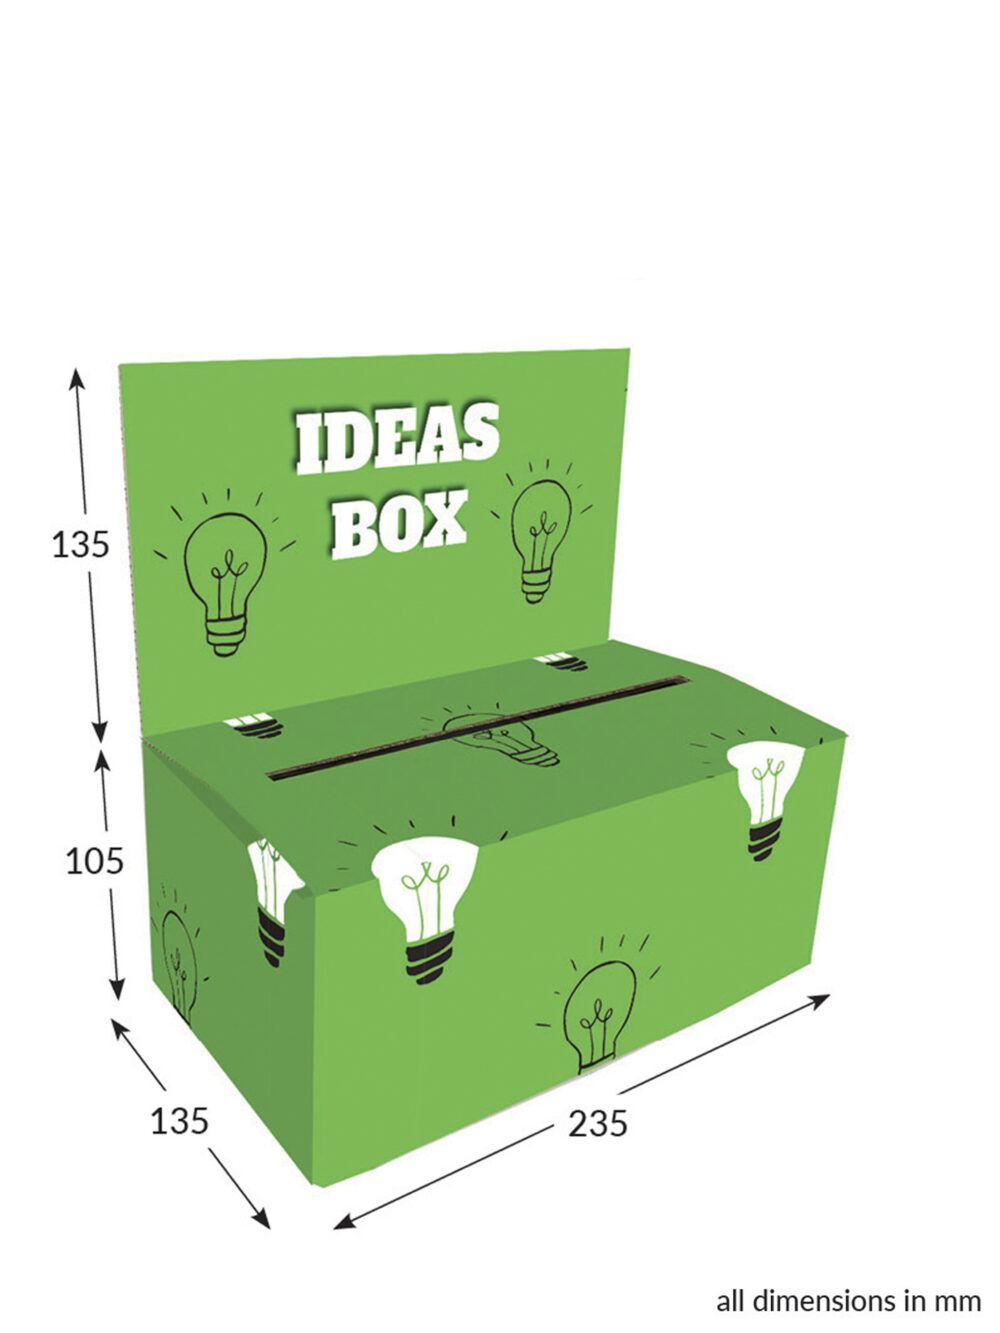 Featured image for “Ballot Box Small - Ideas Box”